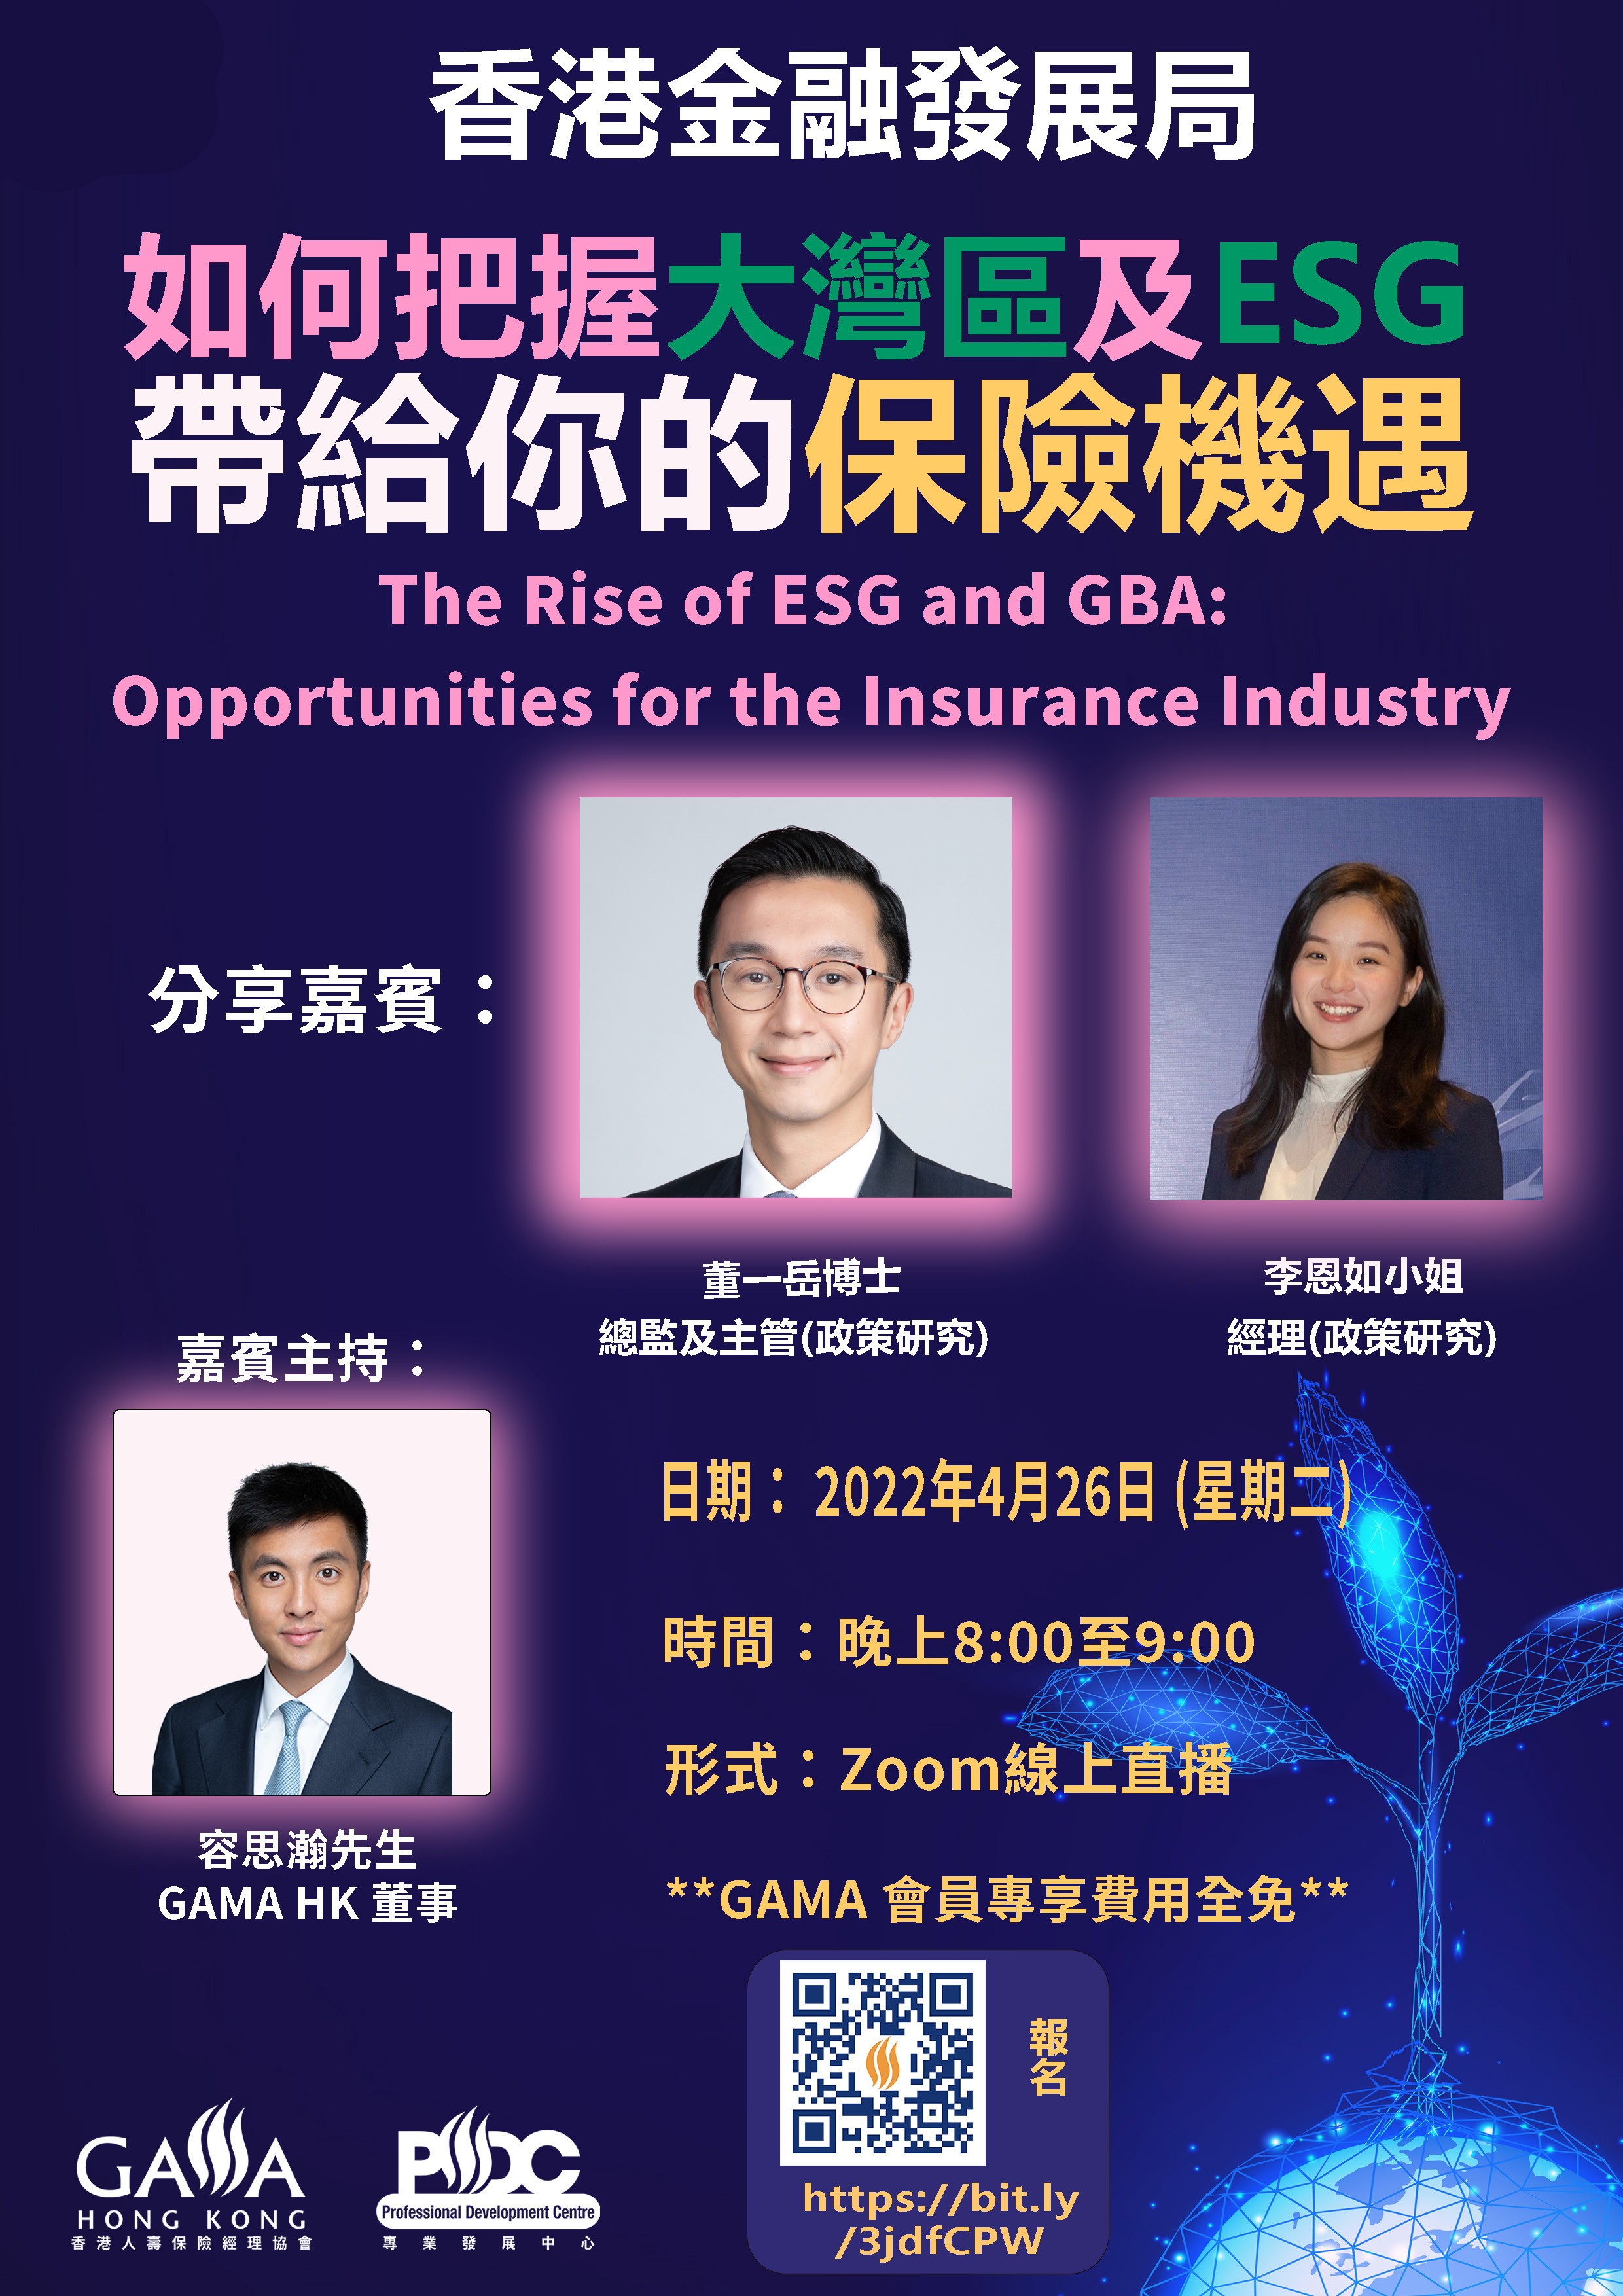 ESG poster final edition